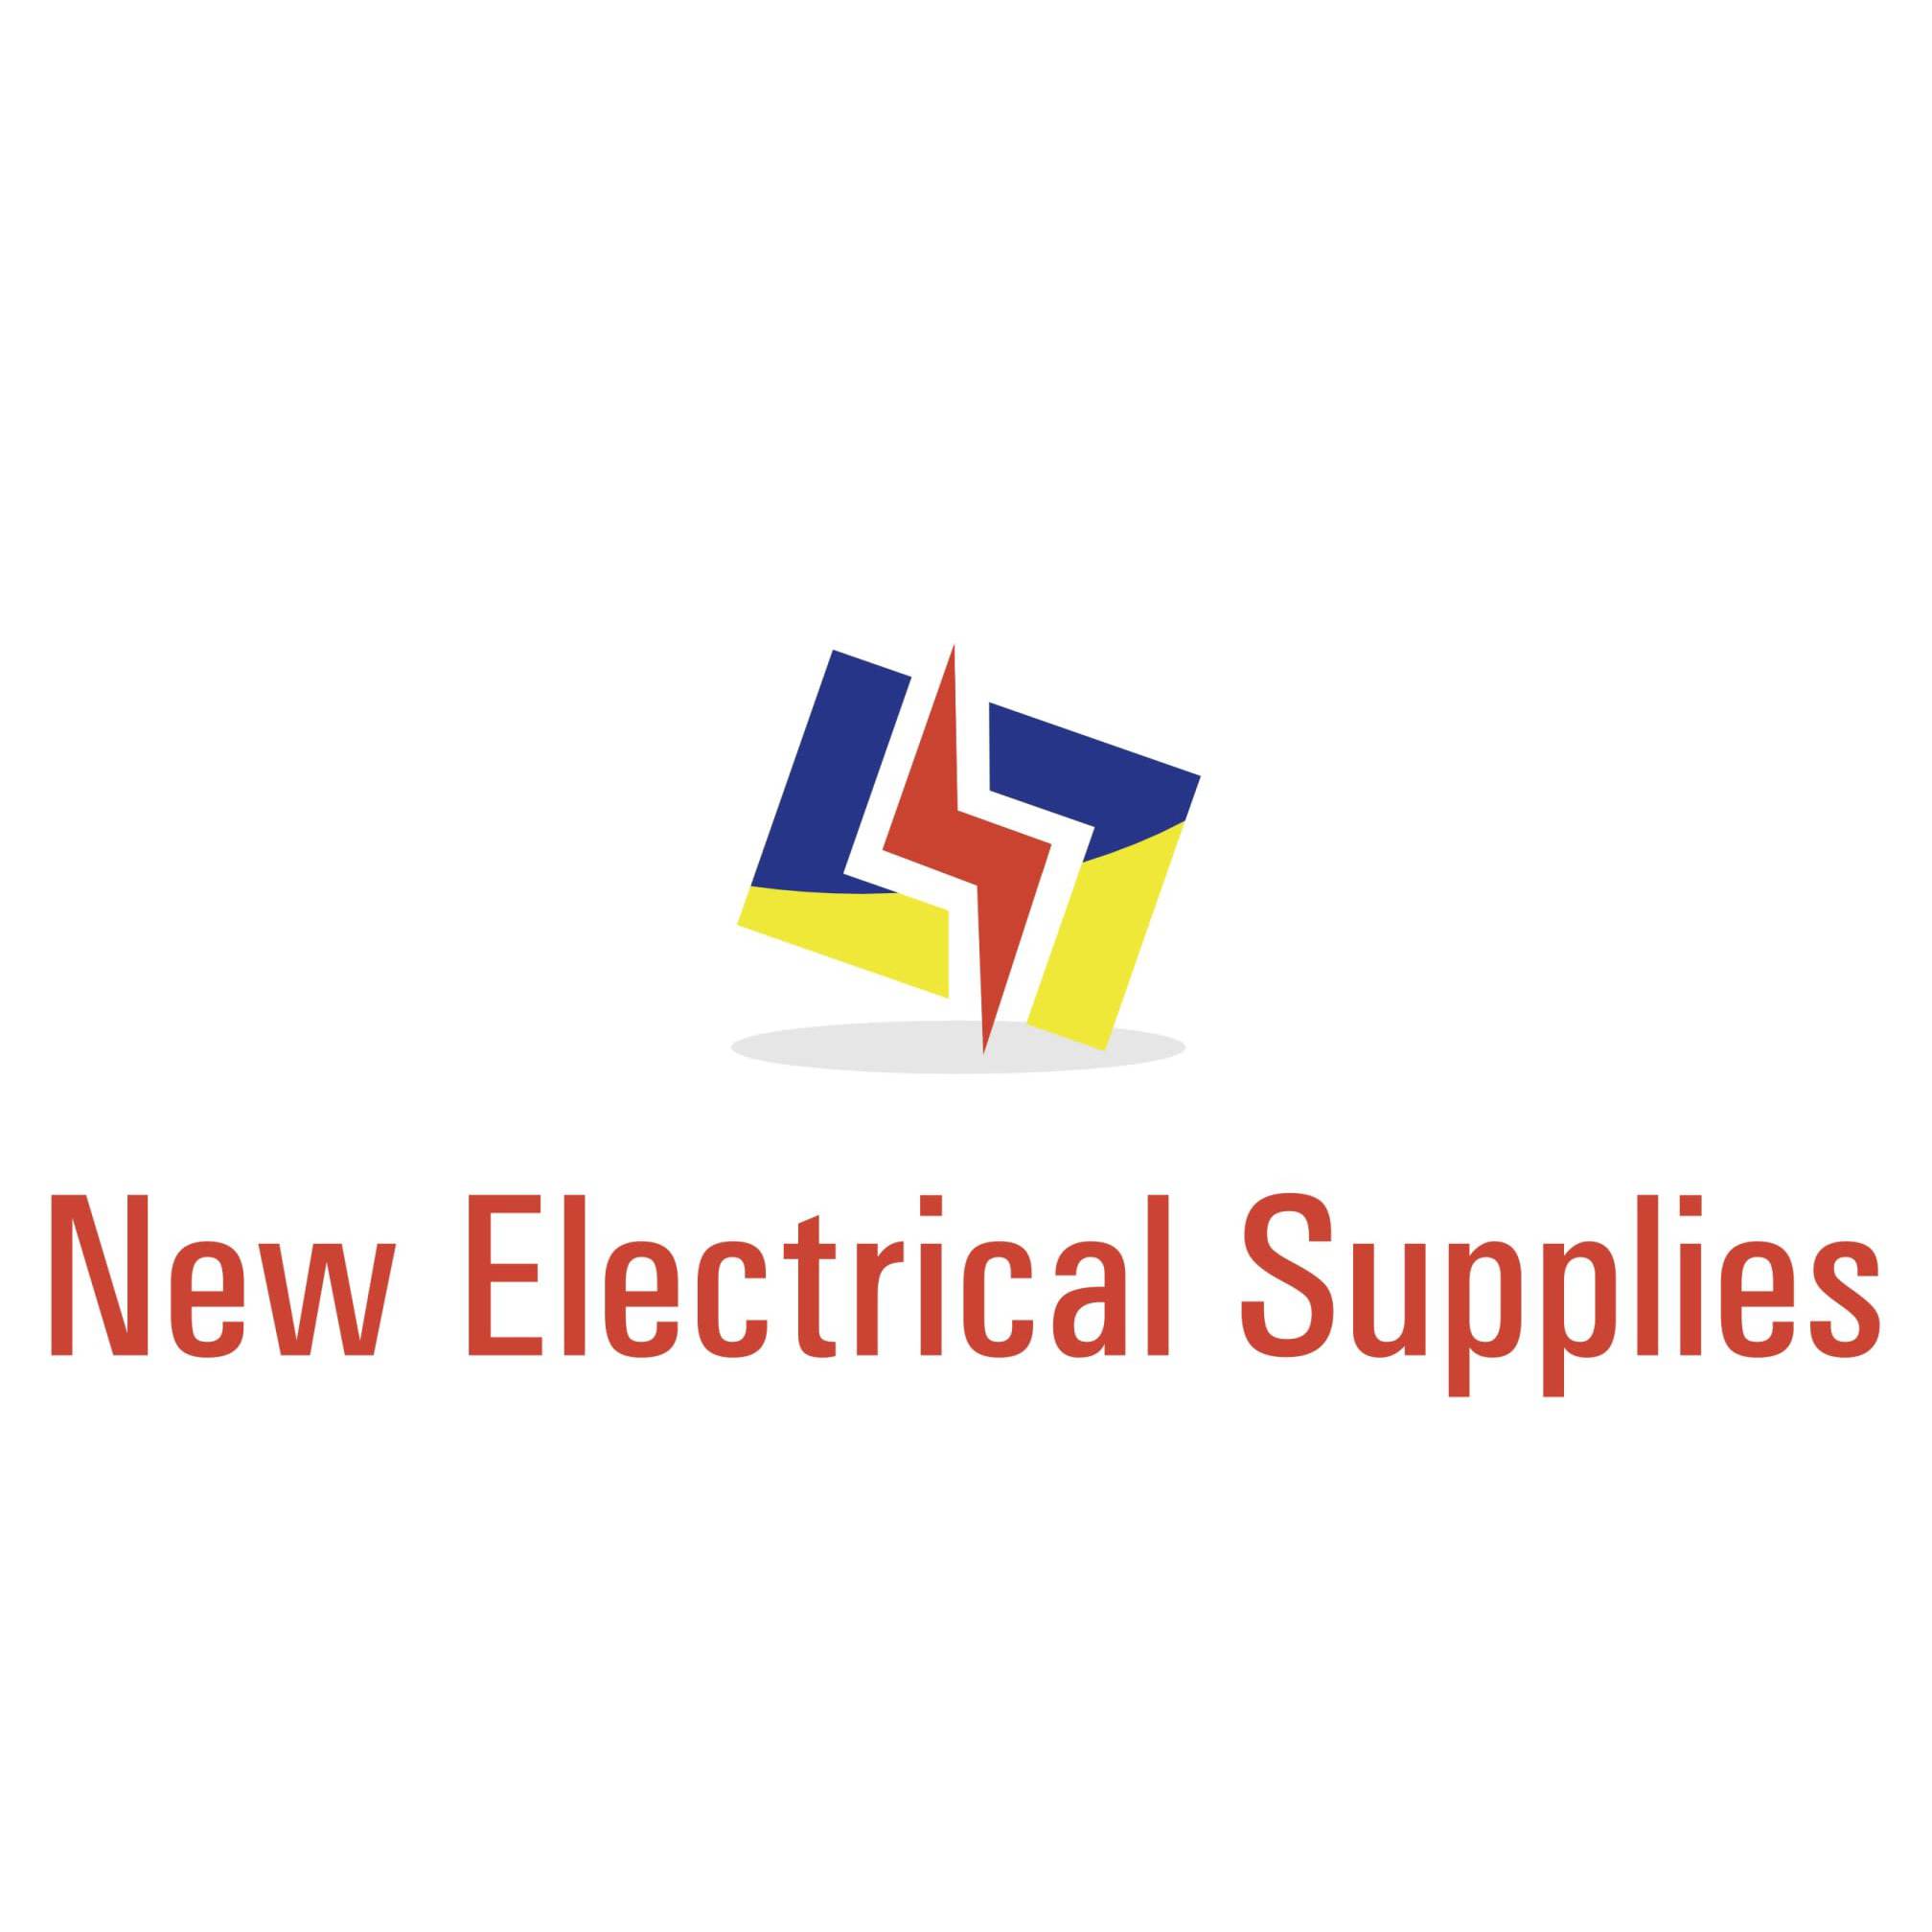 LOGO New Electrical Supplies Bexleyheath 020 8303 2228